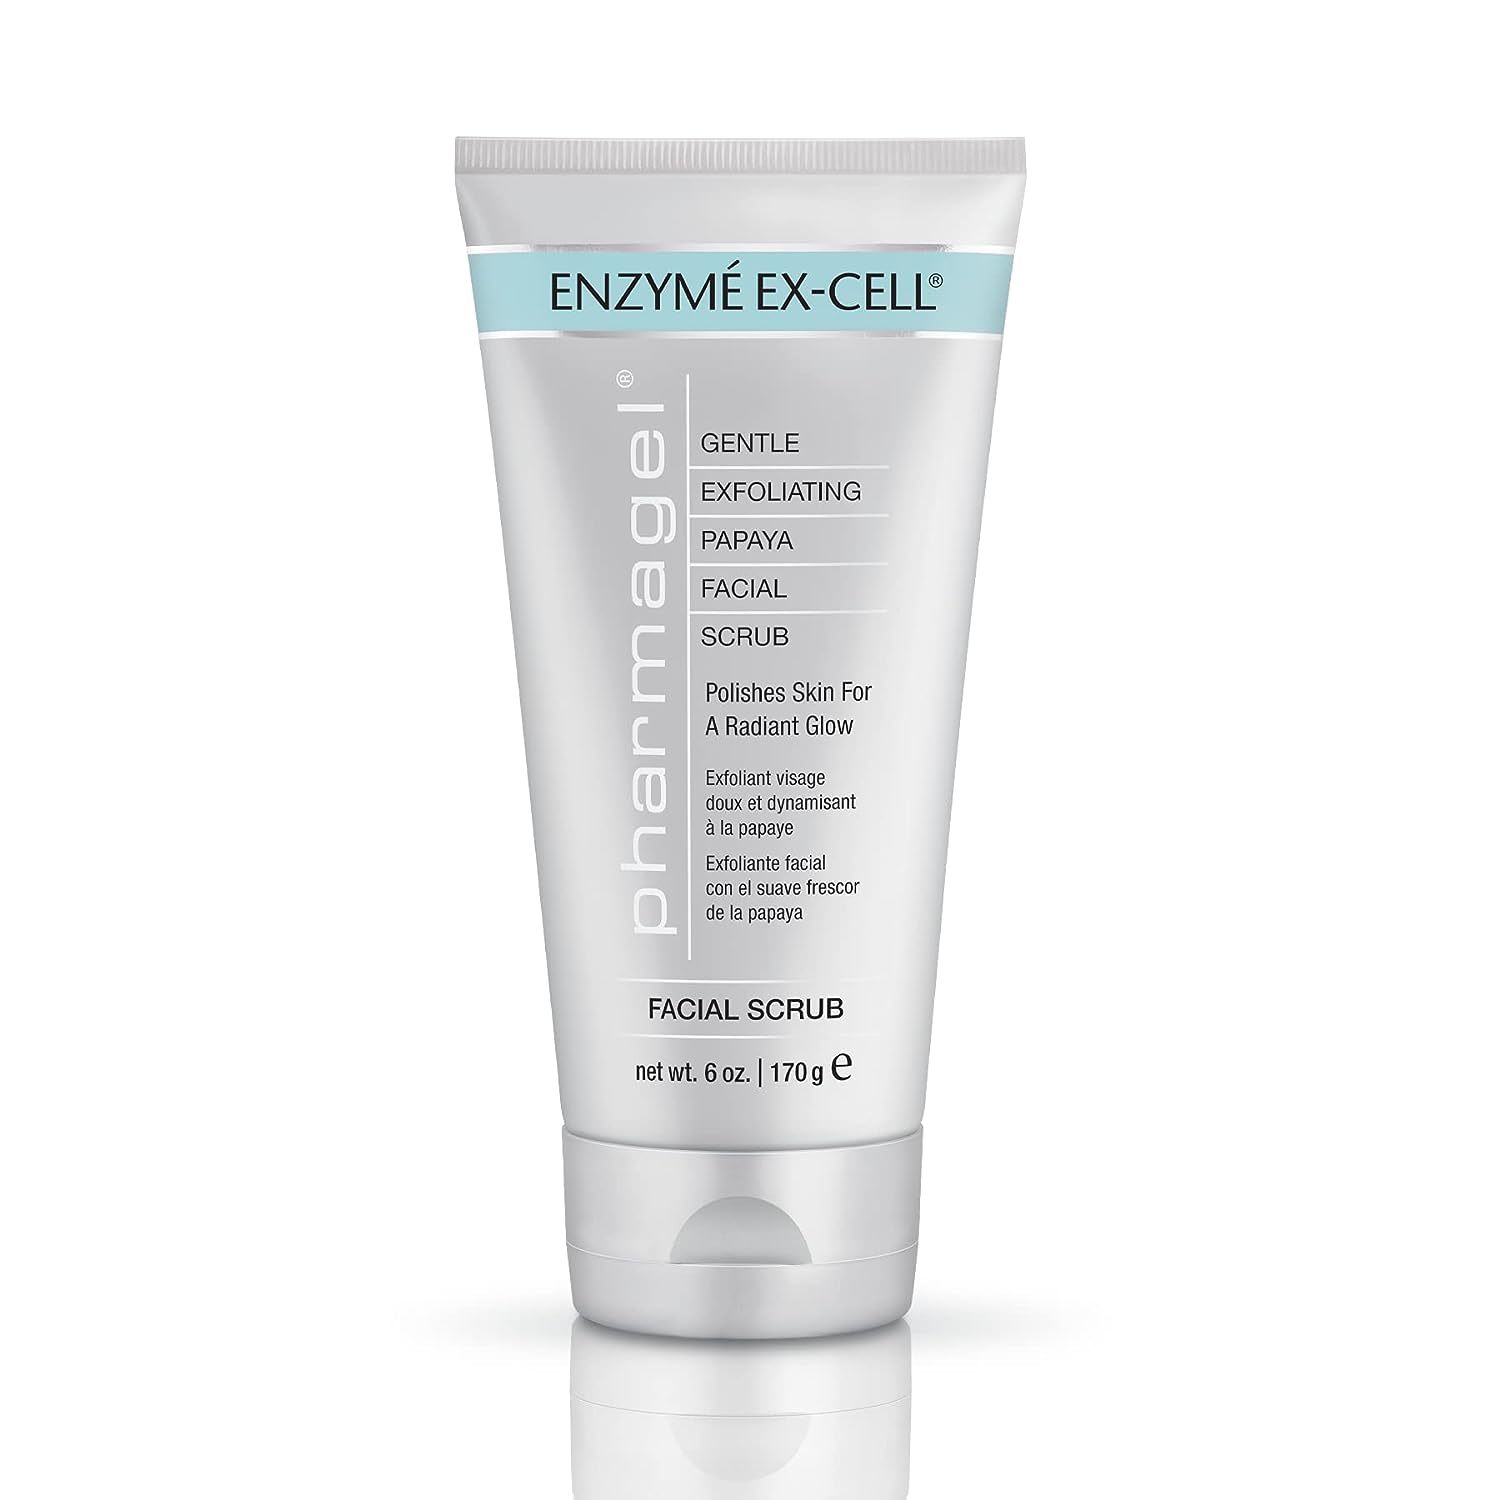 Pharmagel Enzyme Ex-Cell Facial Scrub 6oz - $48.00